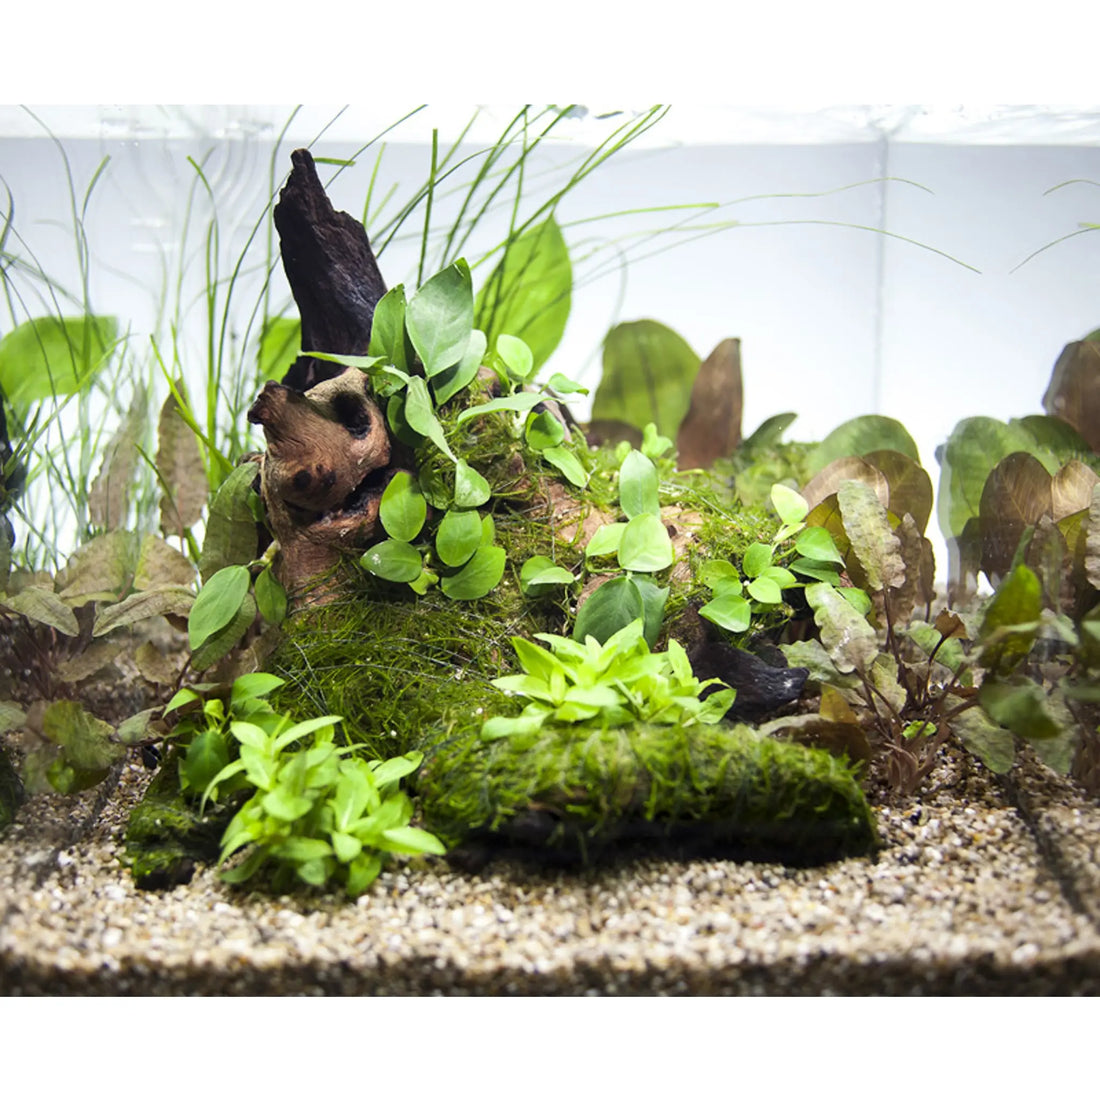  DOITOOL 1 Set Simulated Fish Tank Aquatic Plants Moss